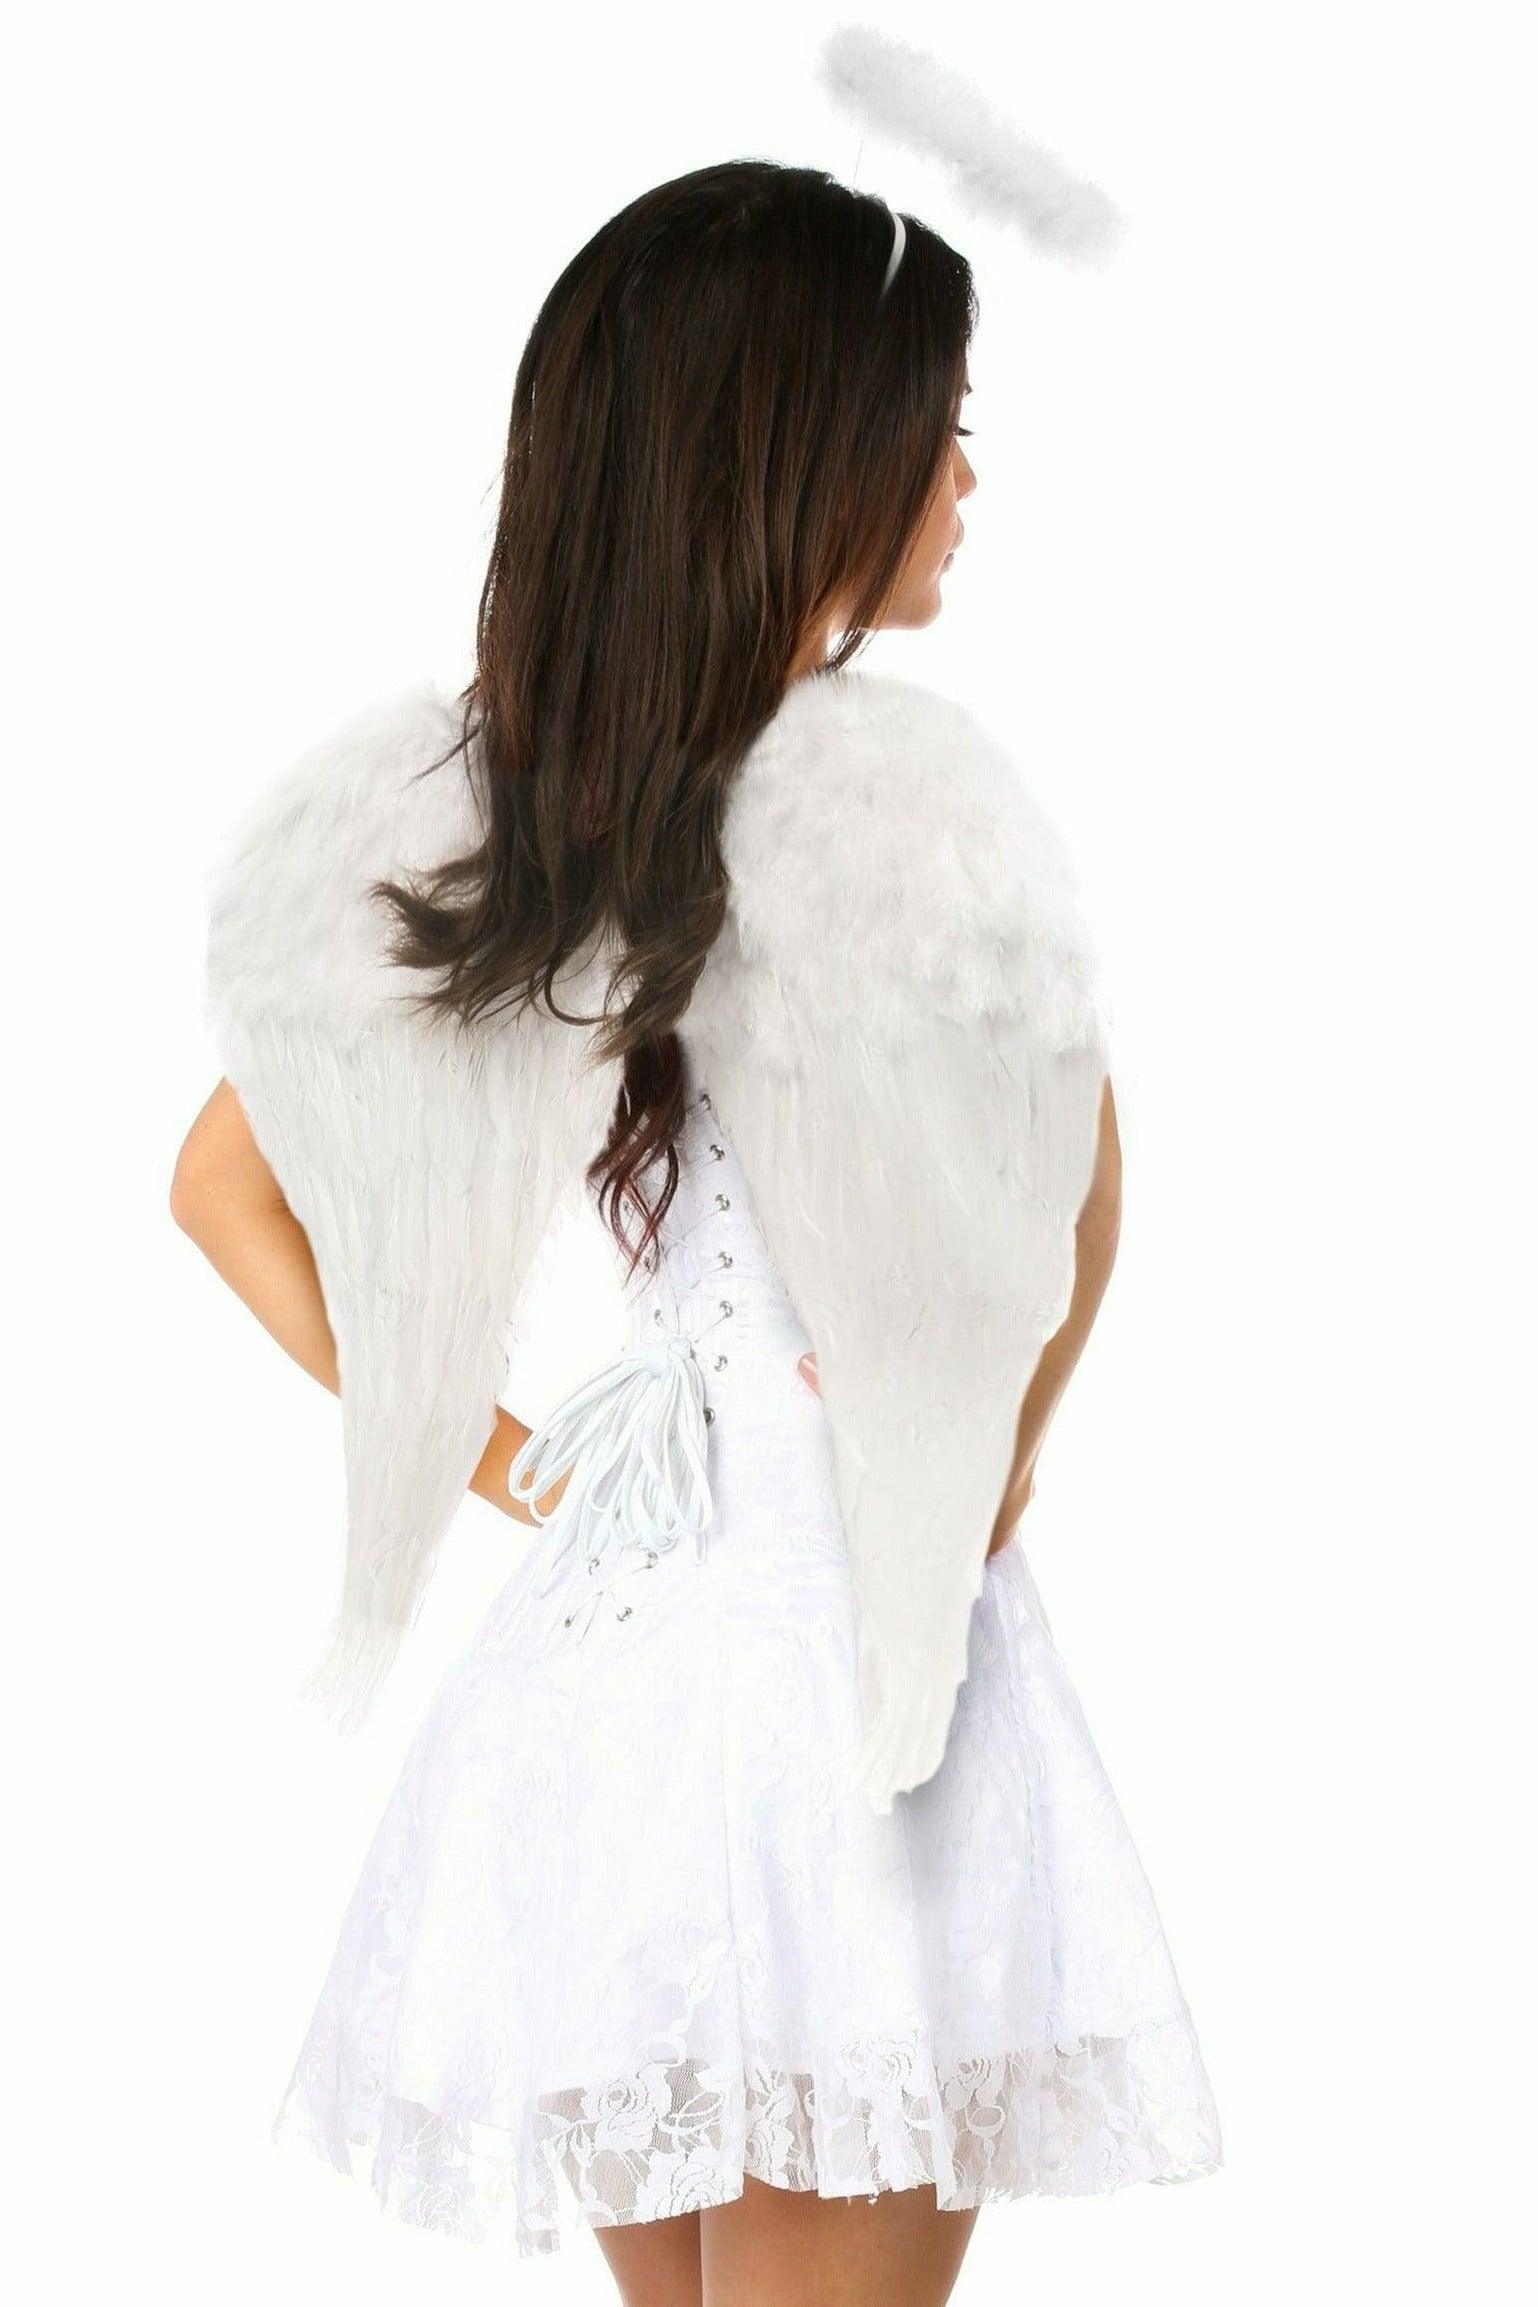 Lavish 3 PC Innocent Angel Corset Costume - Flyclothing LLC